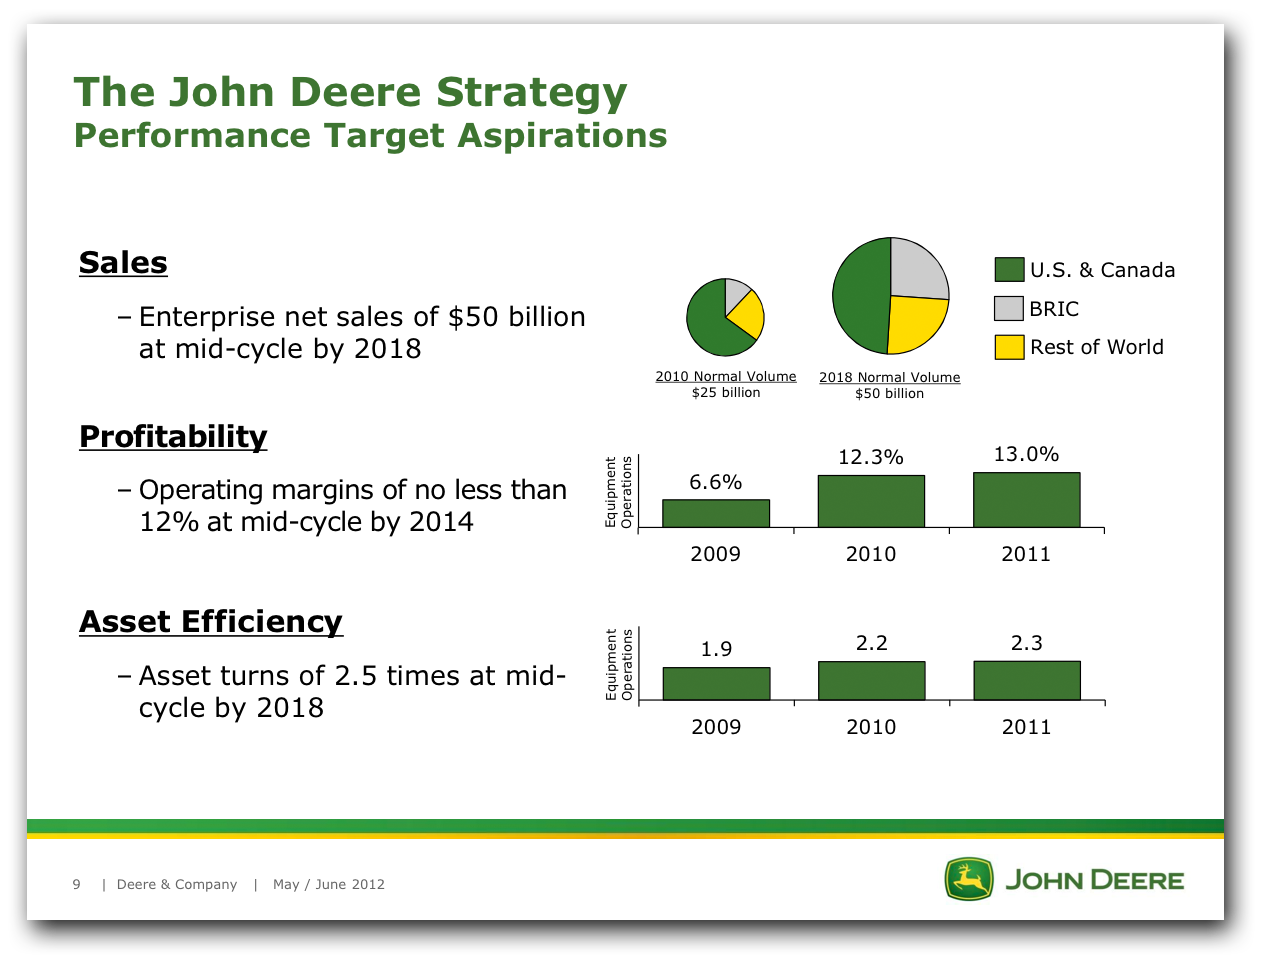 The John Deere Strategy: Performance Target Aspirations